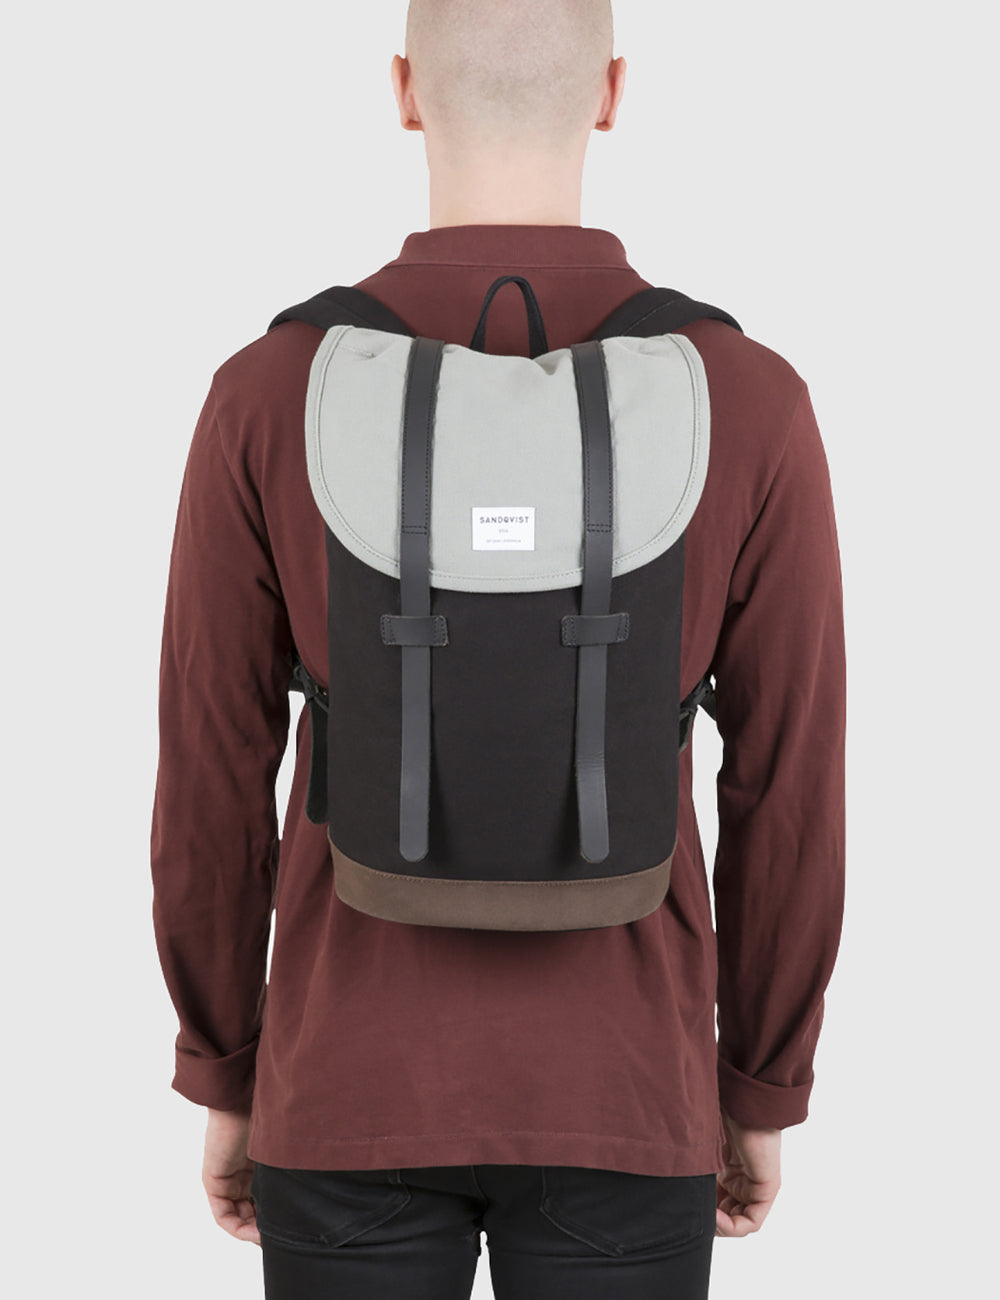 MultiSac Milton Backpack